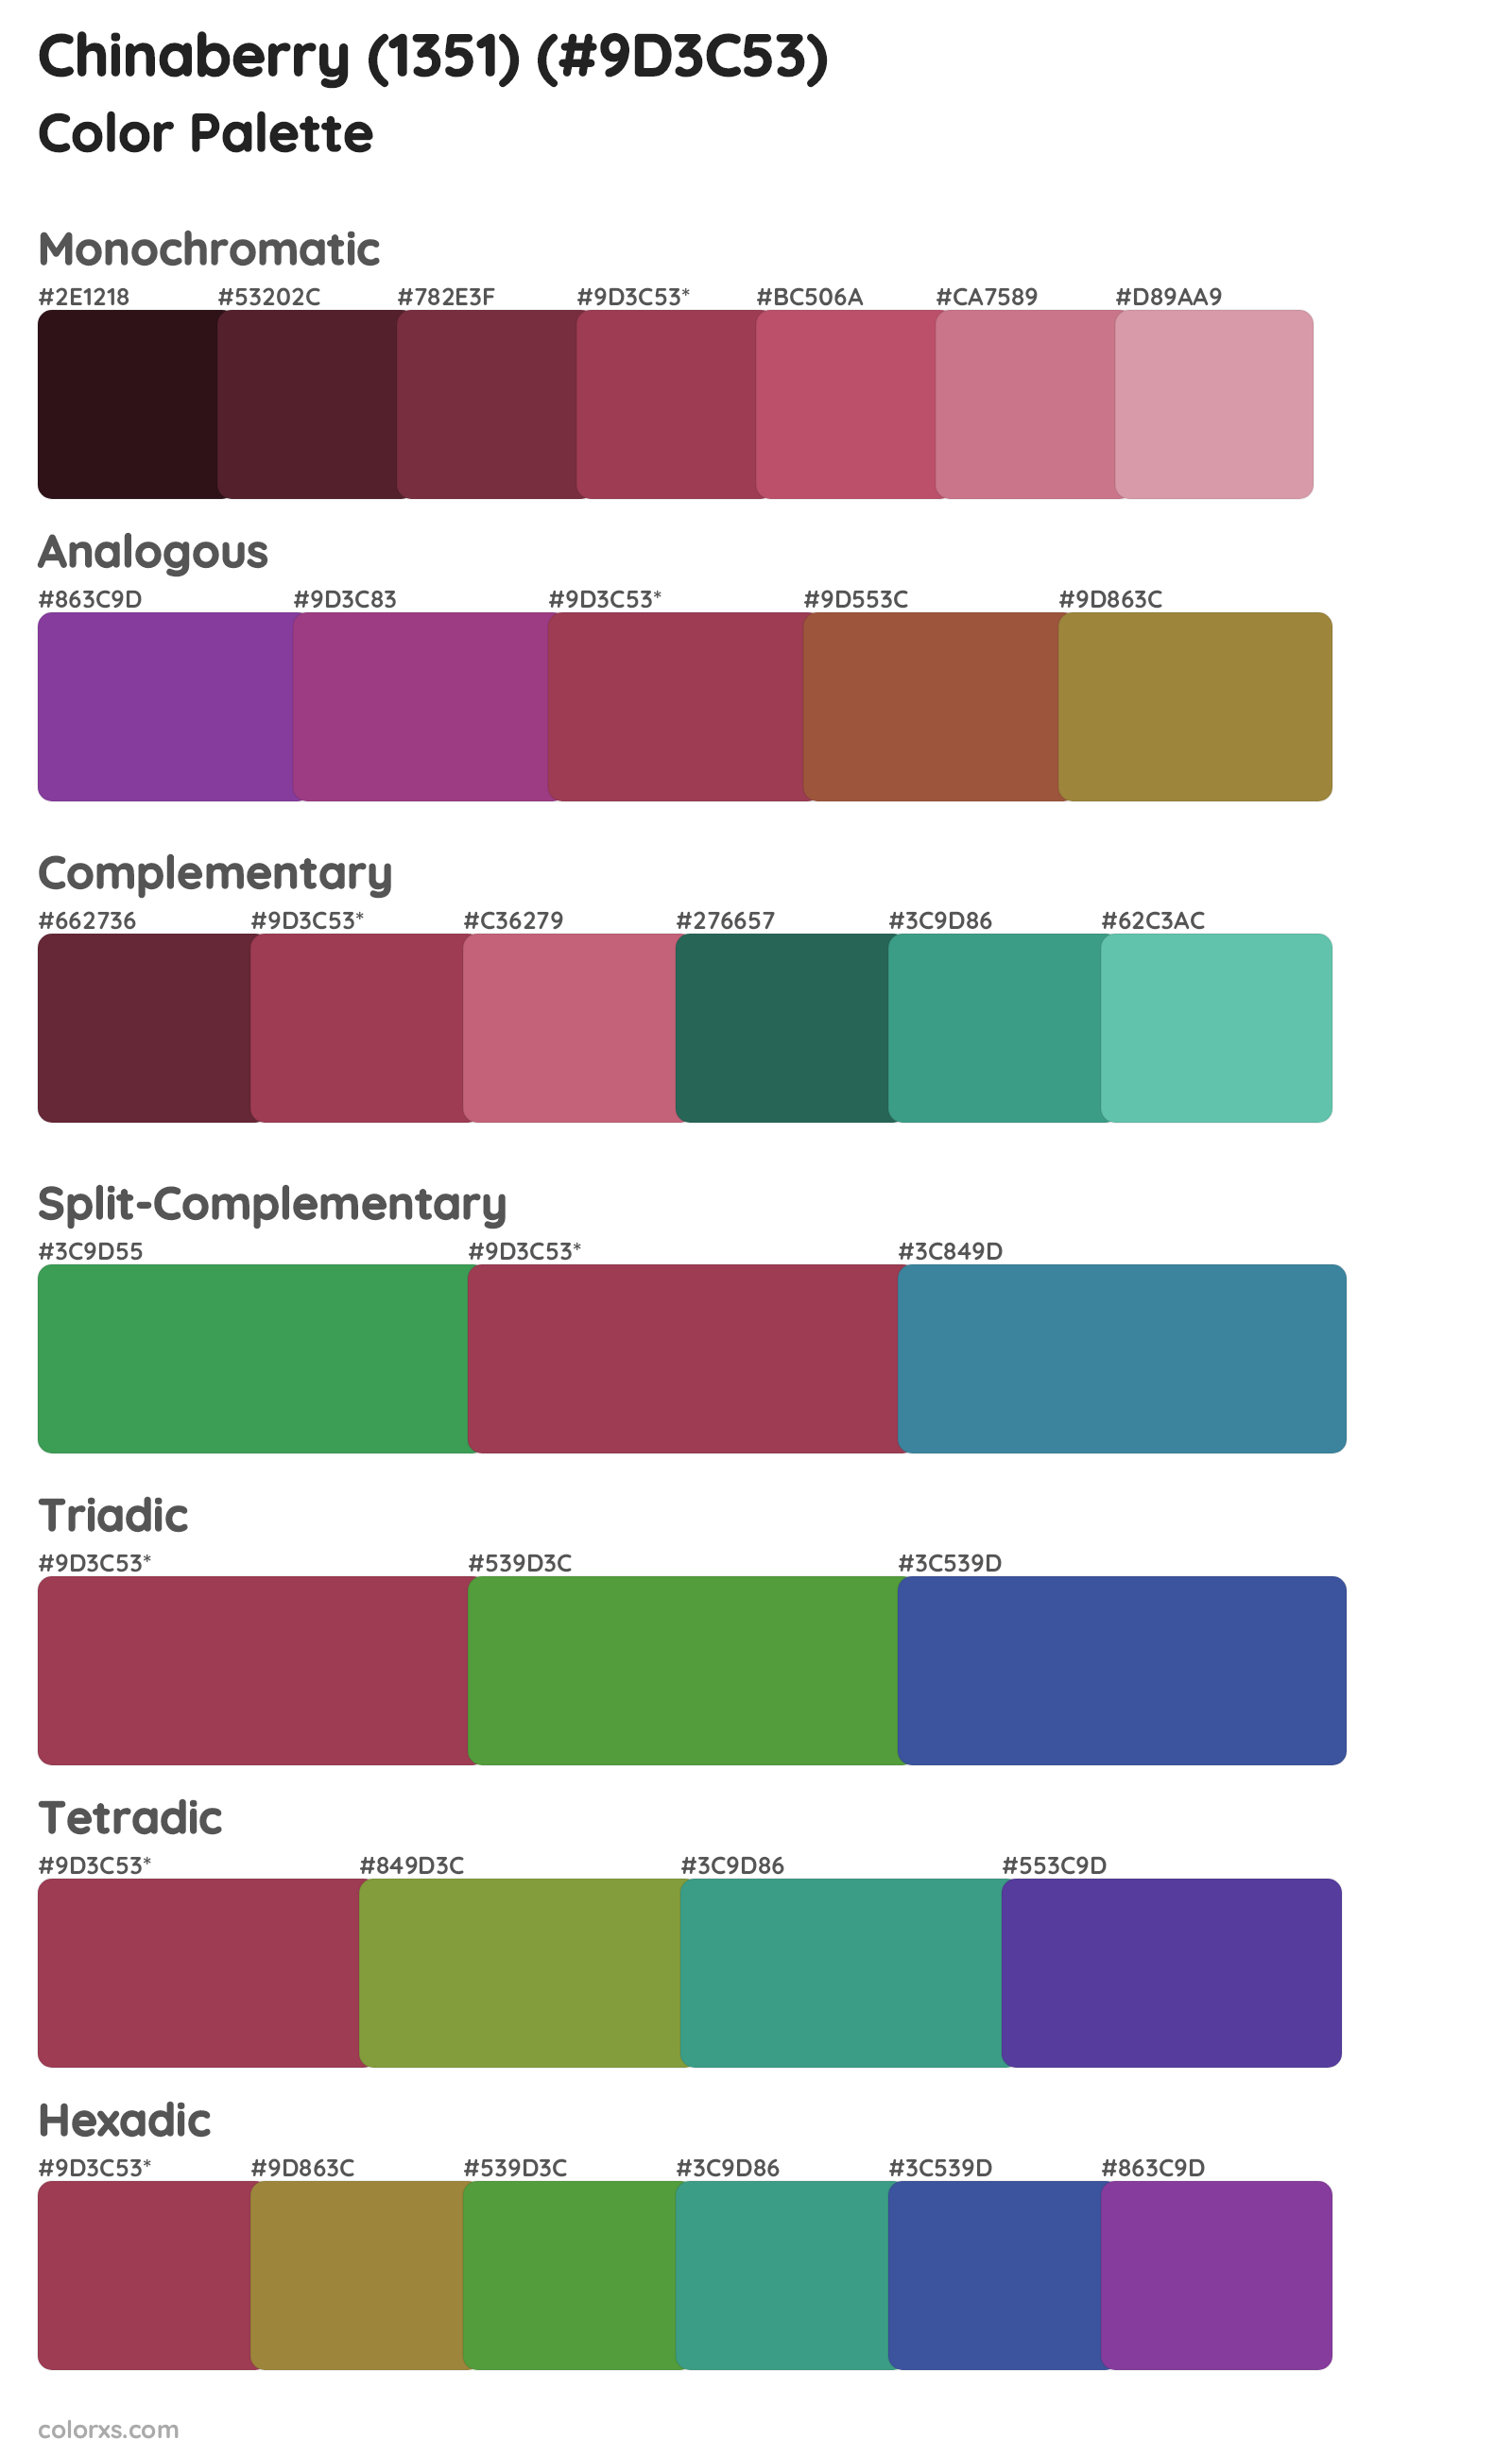 Chinaberry (1351) Color Scheme Palettes